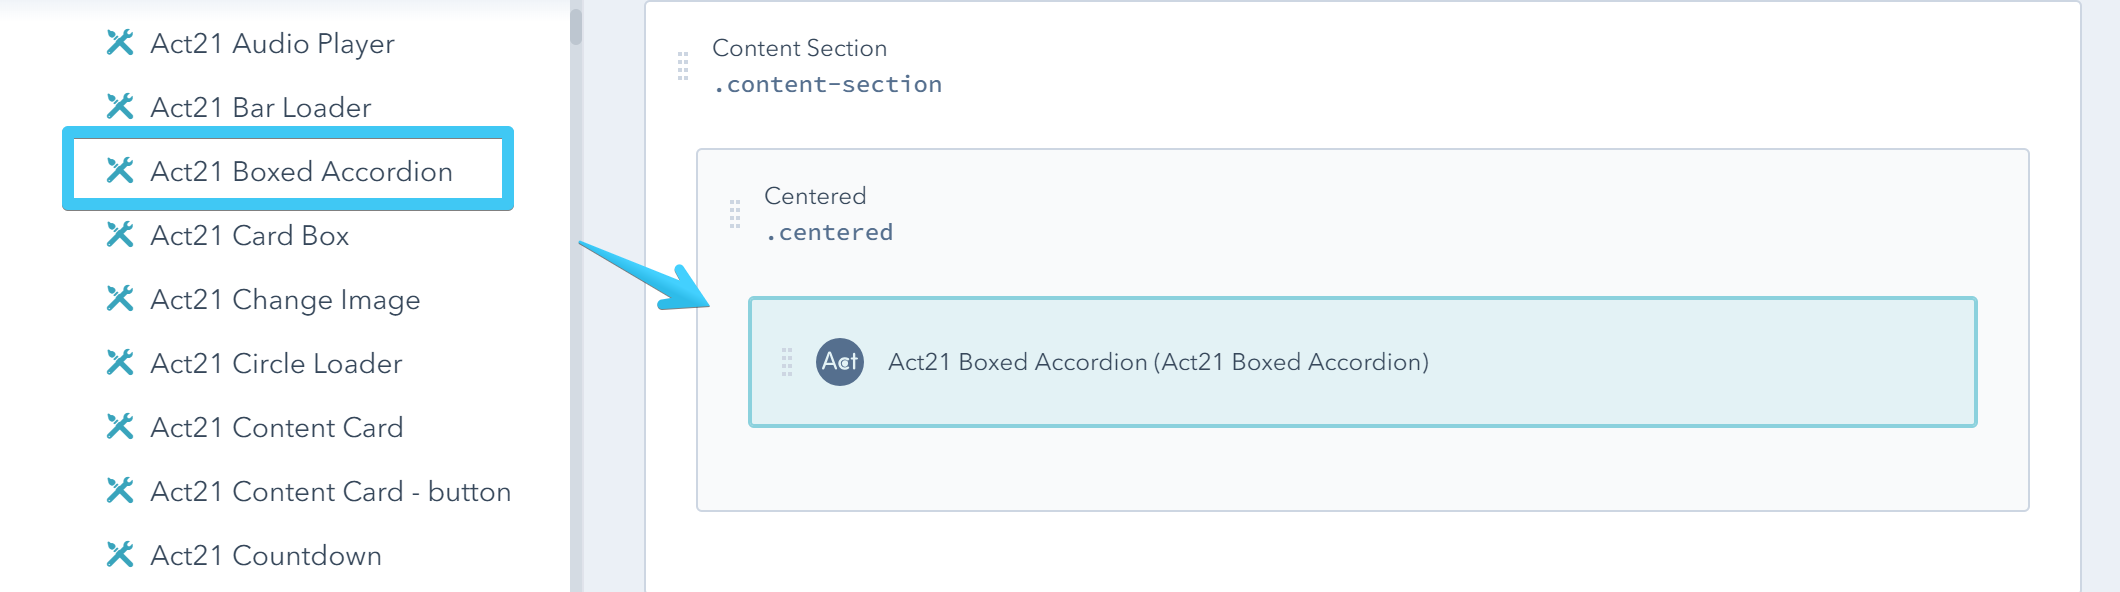 Act21 Boxed Accordion Module